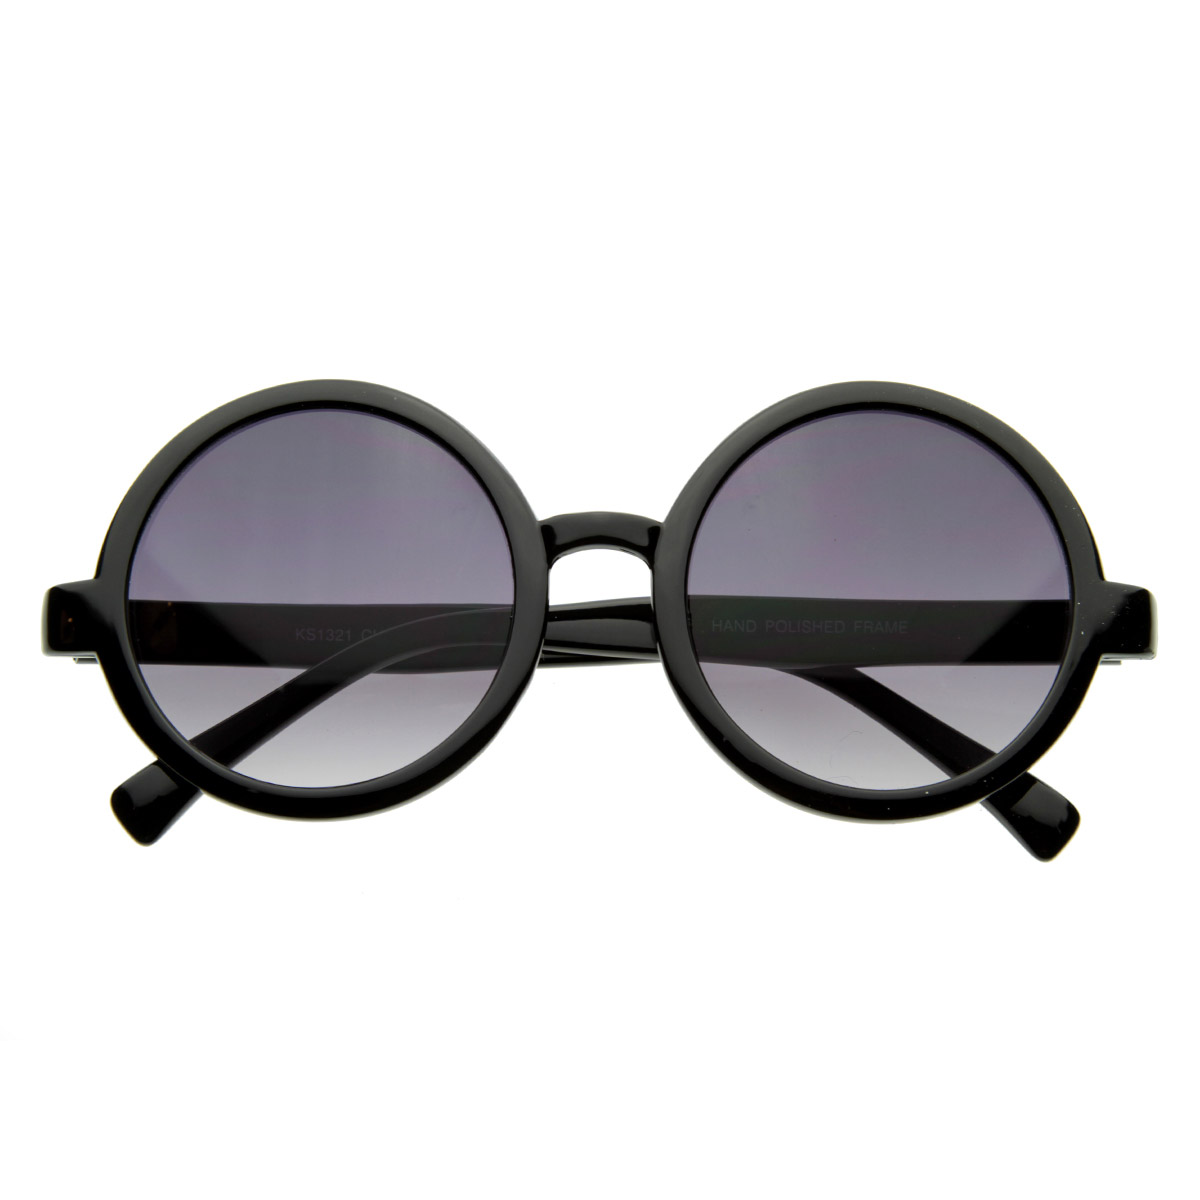 sunglassLA Cute Mod-era Vintage Inspired Round Circle Sunglasses | eBay